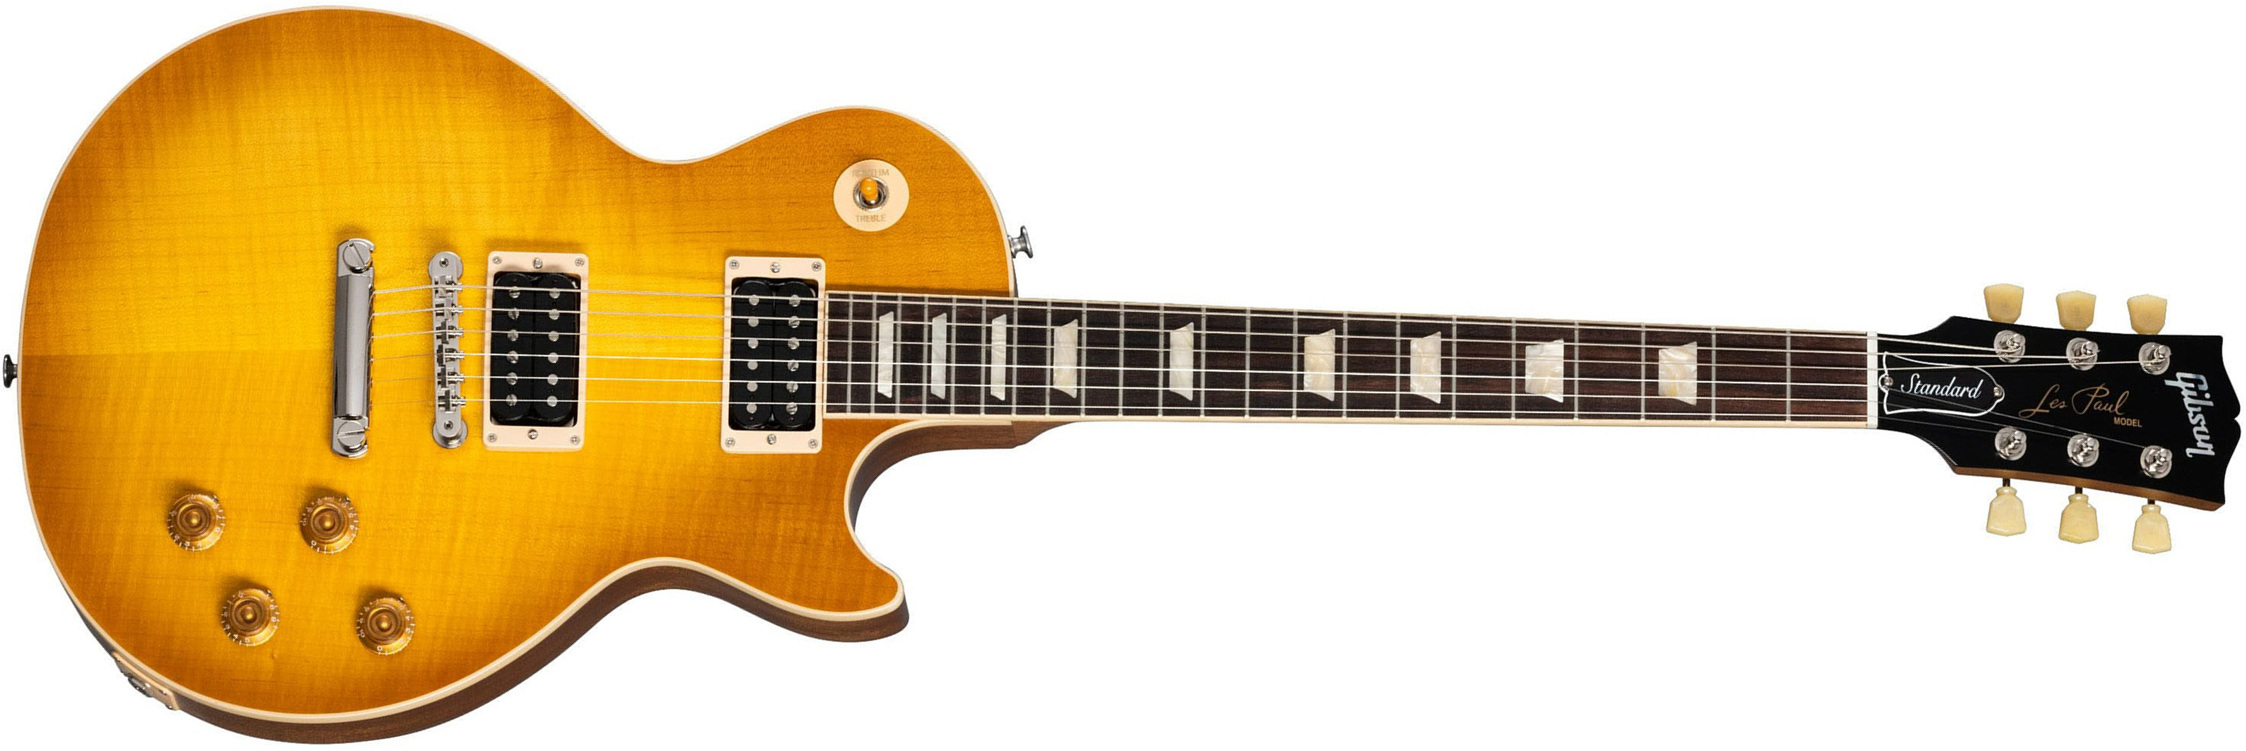 Gibson Les Paul Standard 50s Faded Original 2h Ht Rw - Vintage Honey Burst - Single cut electric guitar - Main picture